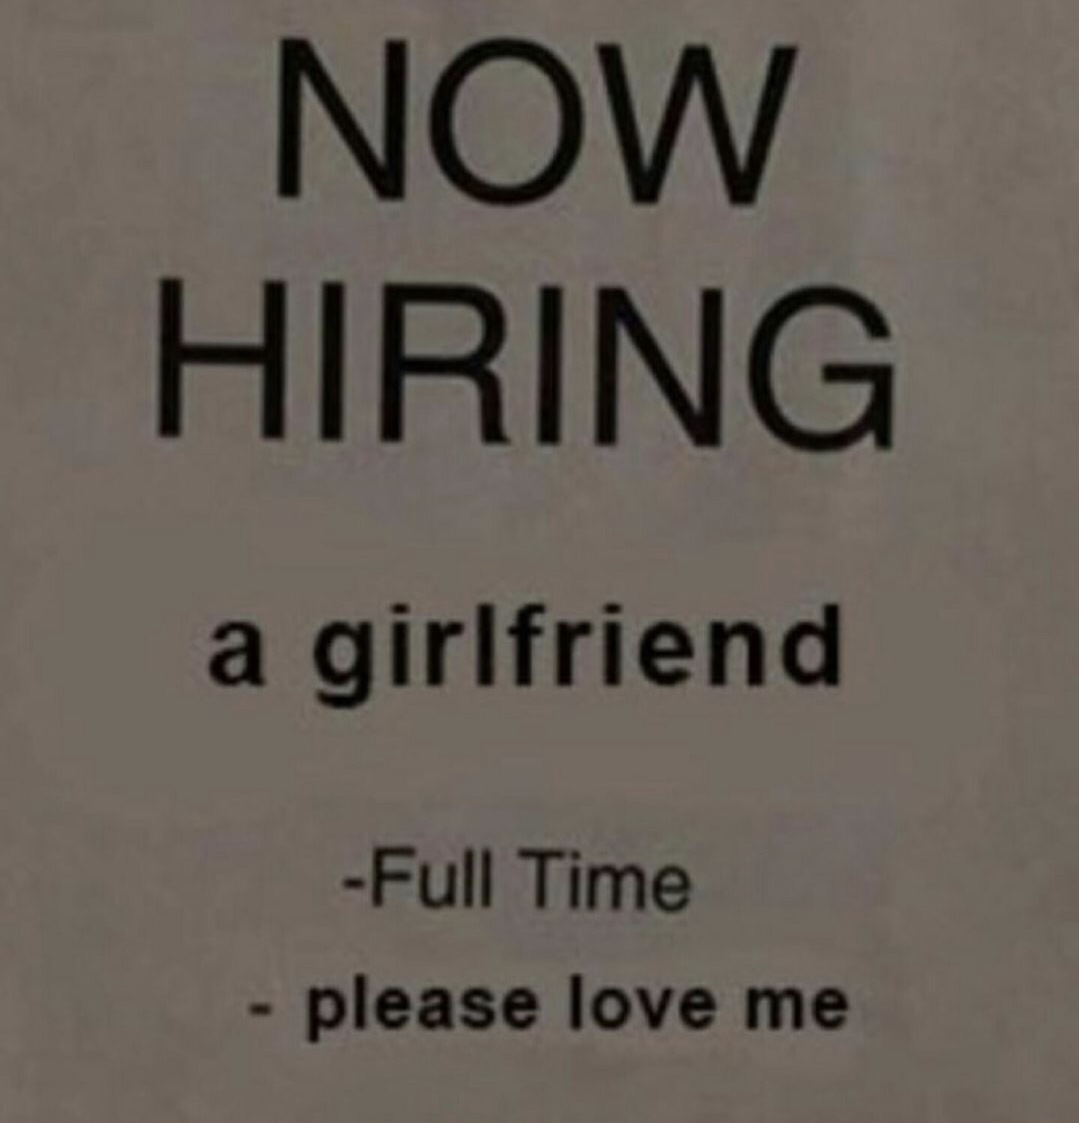 hiring girlfriend meme - Now Hiring a girlfriend Full Time please love me